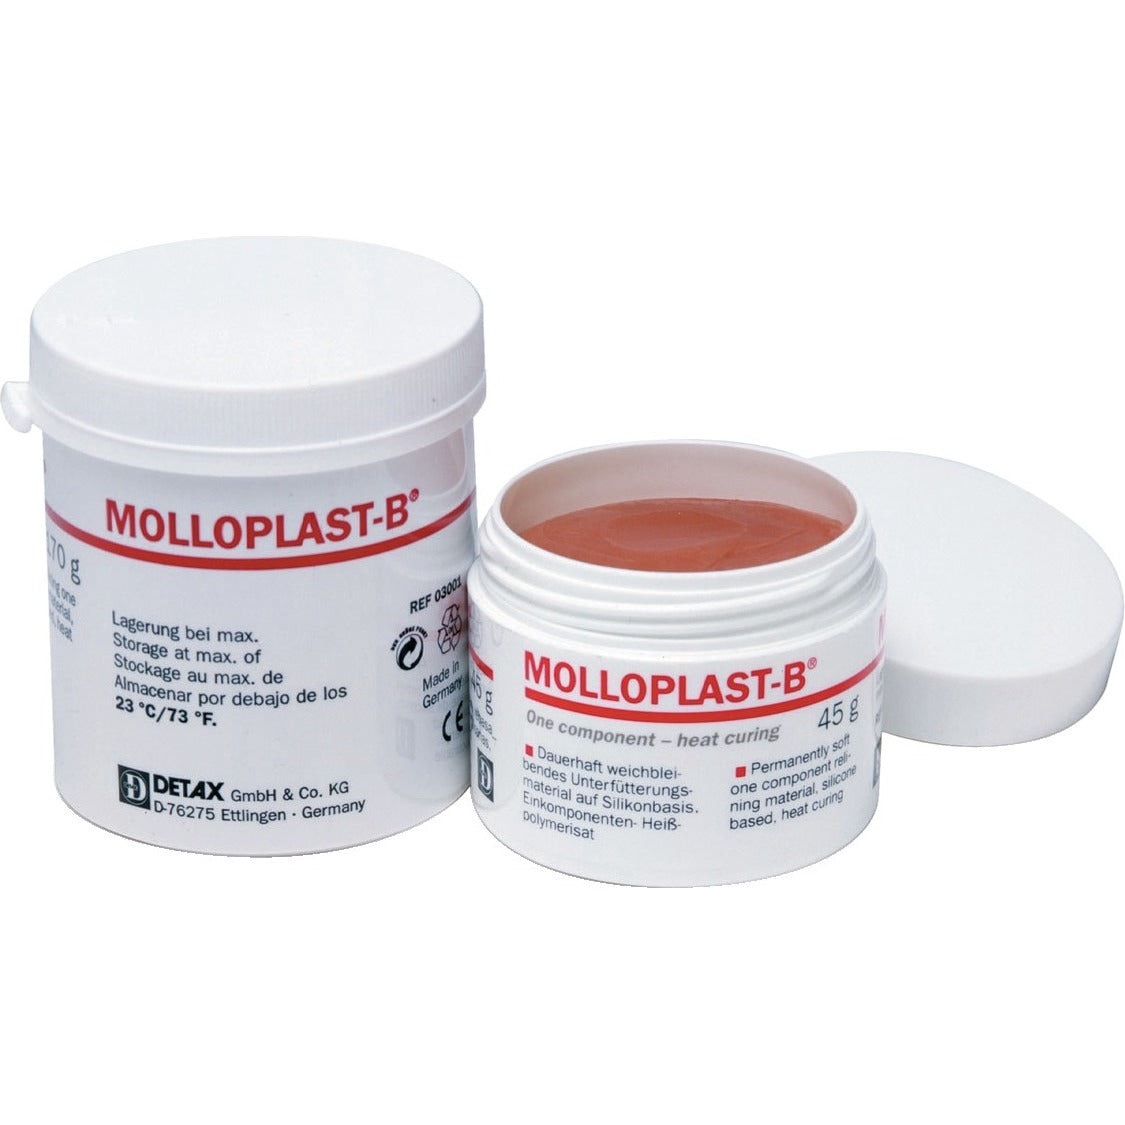 Molloplast-B Regular